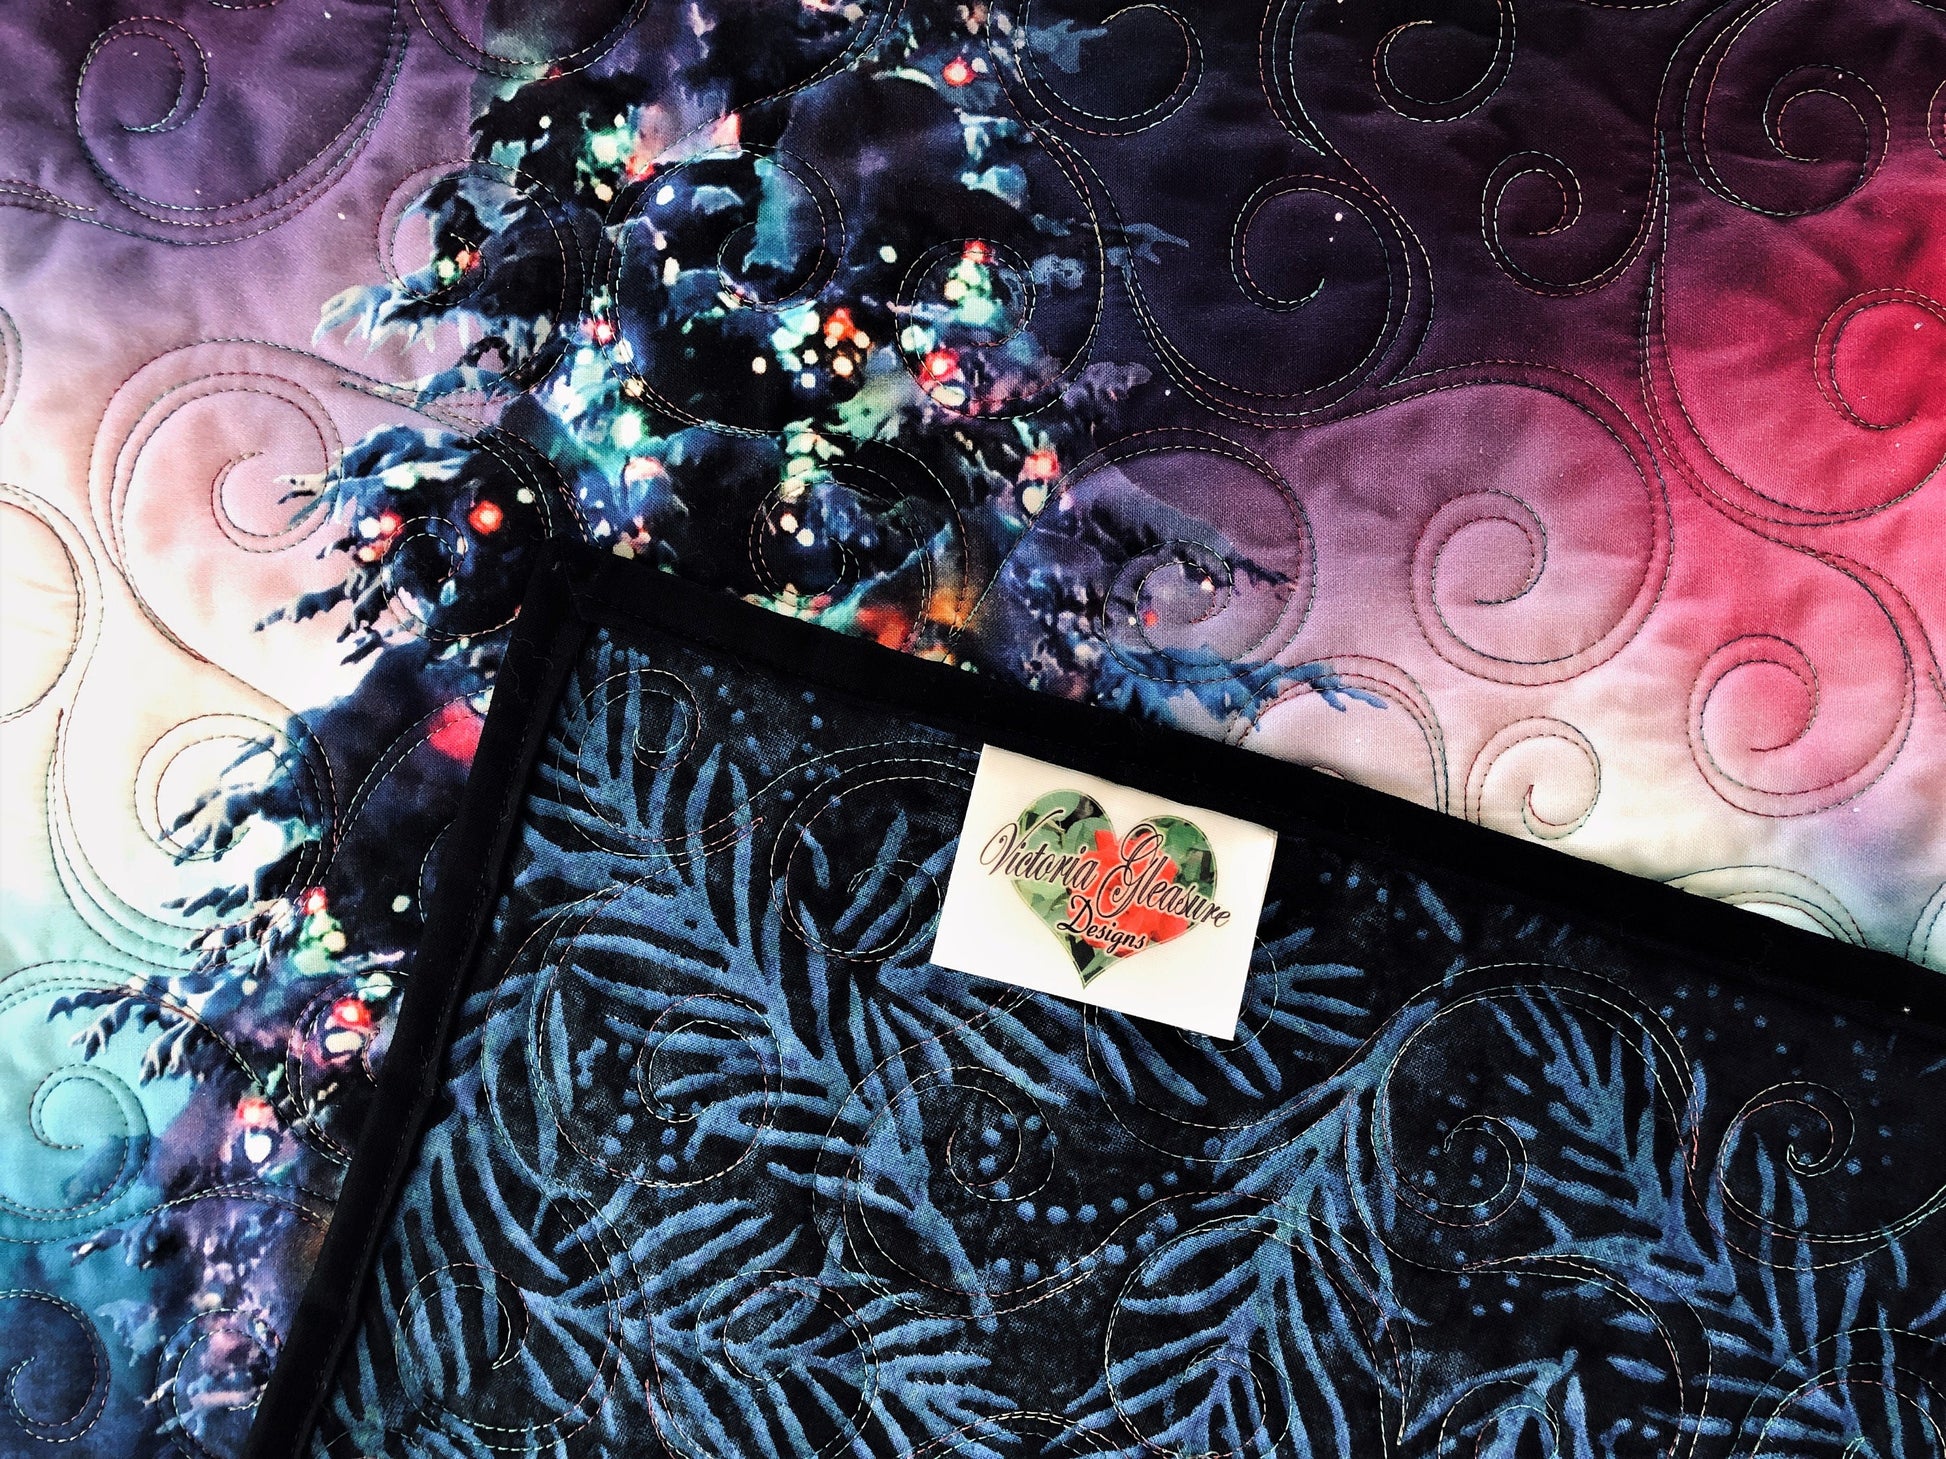 Alaska Aurora Borealis and Christmas Tree Handmade Lap Quilt